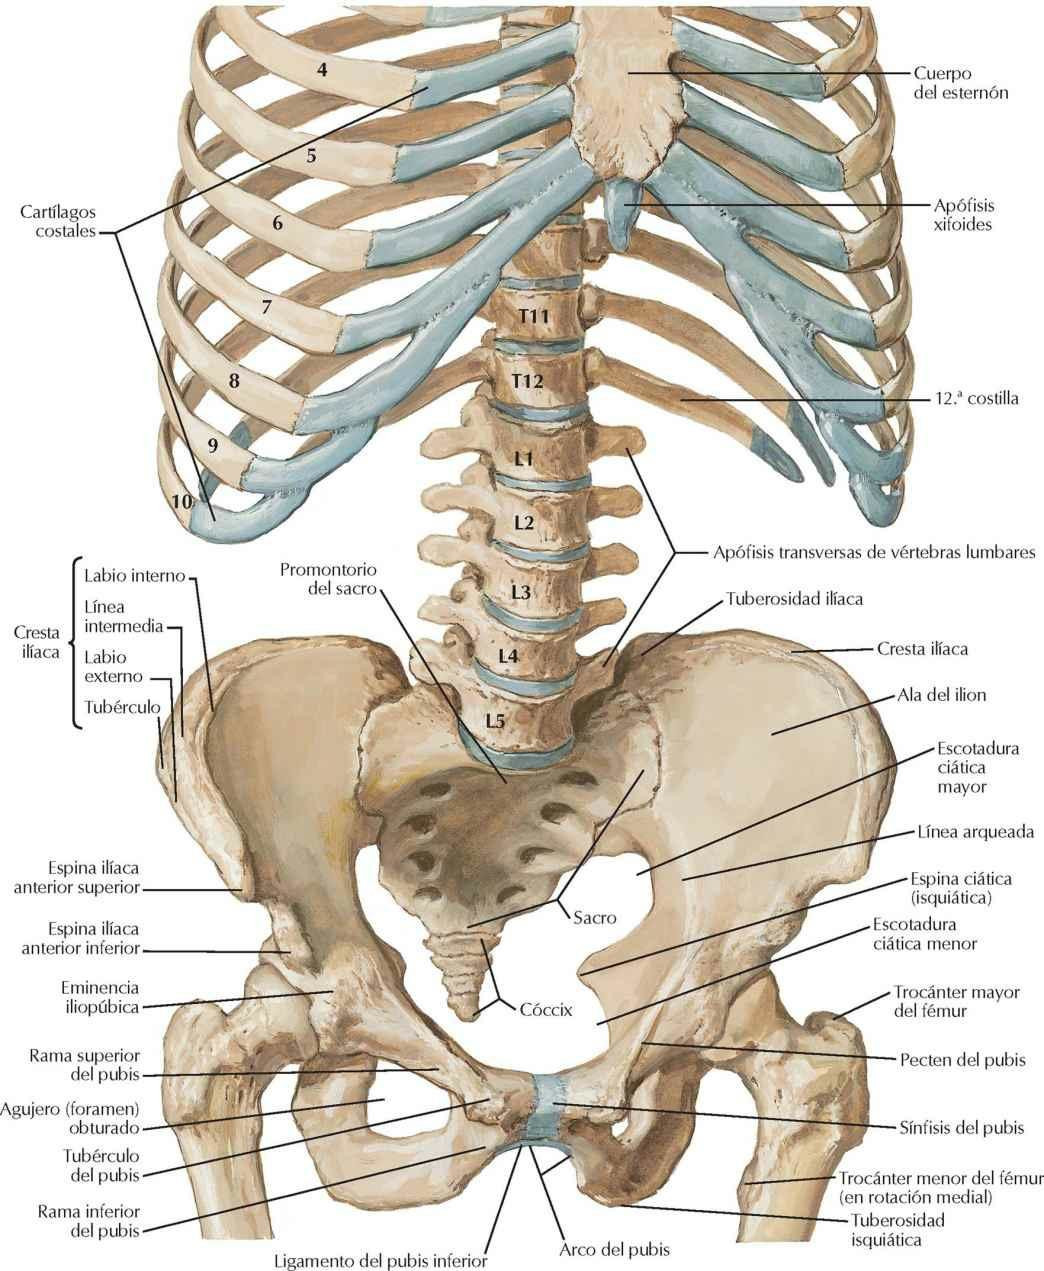 Esqueleto óseo del abdomen